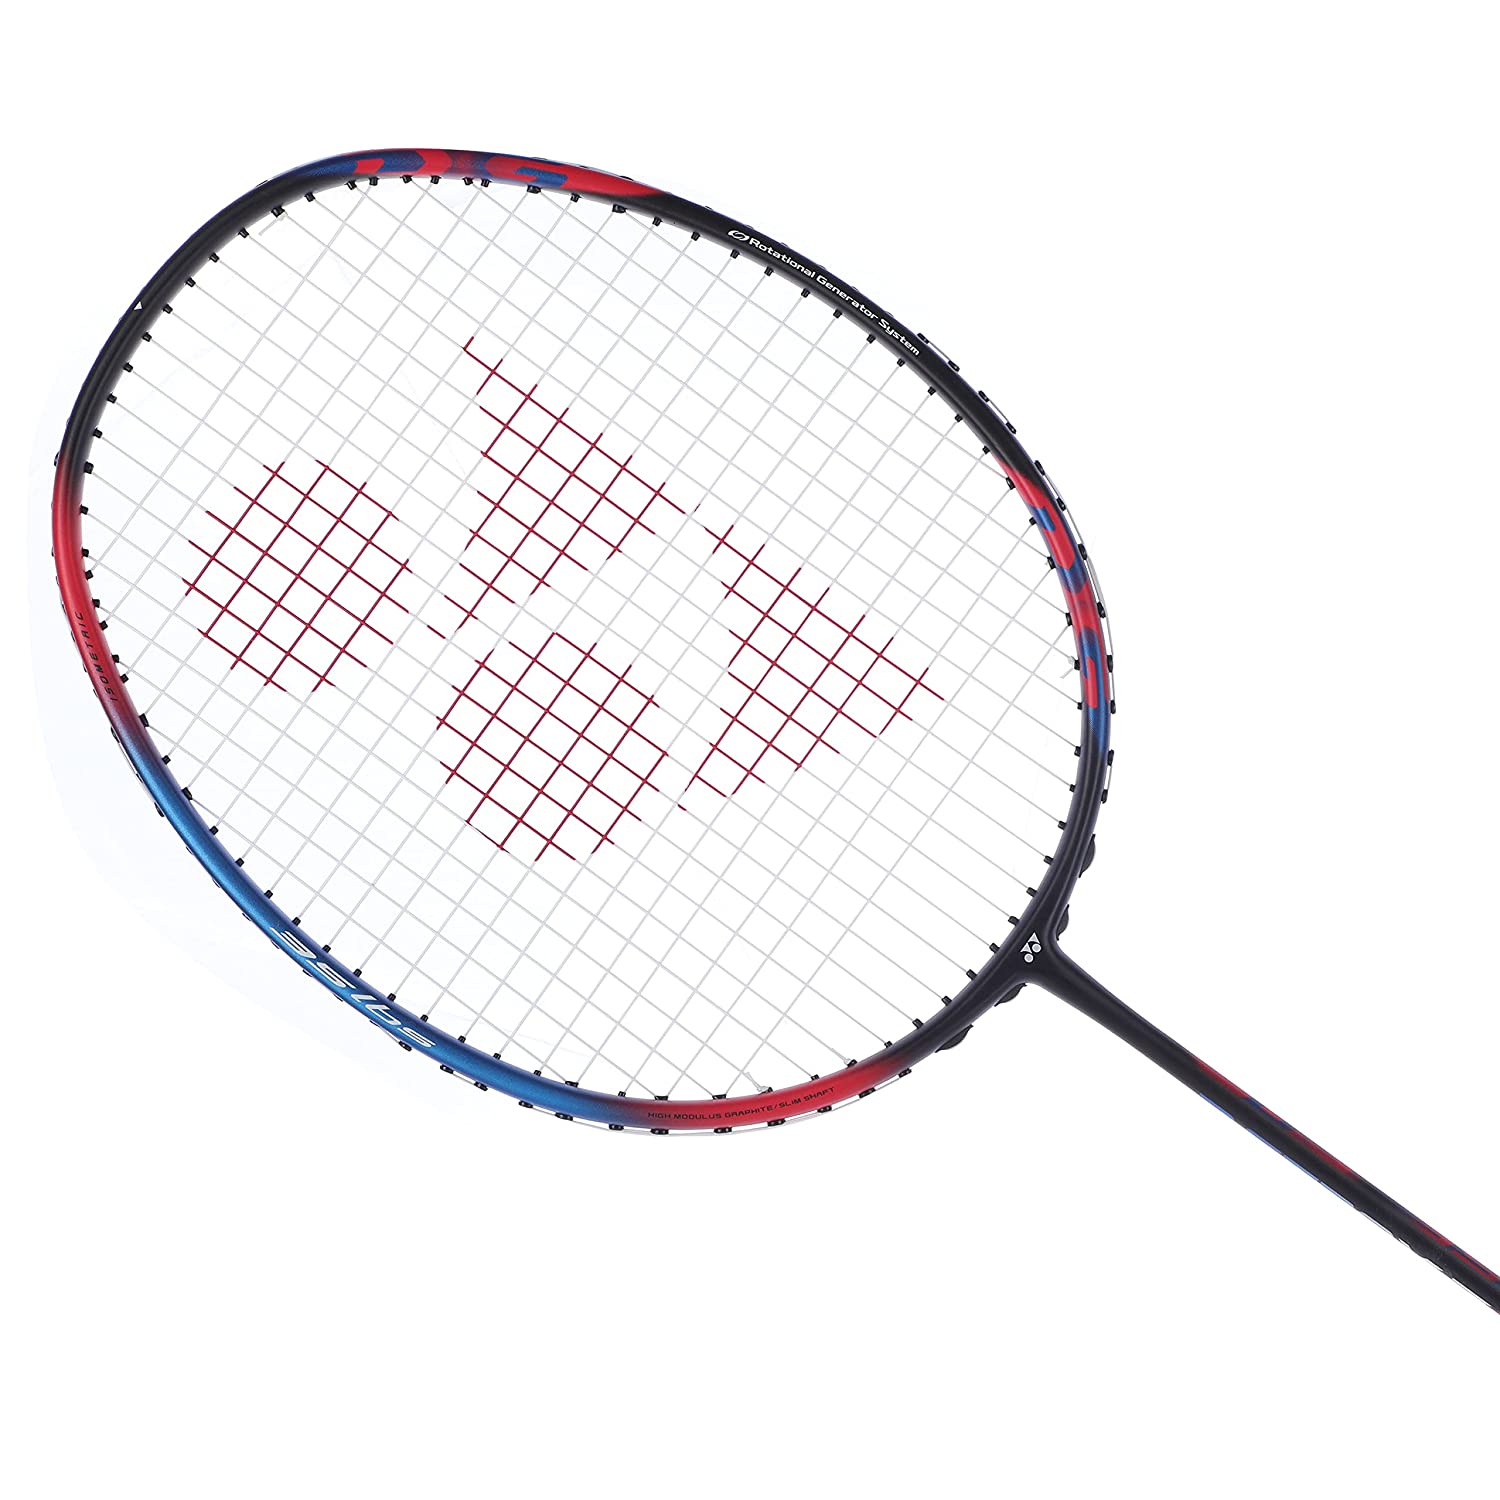 Yonex Astrox 7 DG Badminton Racquet - Black/Blue - Best Price online Prokicksports.com